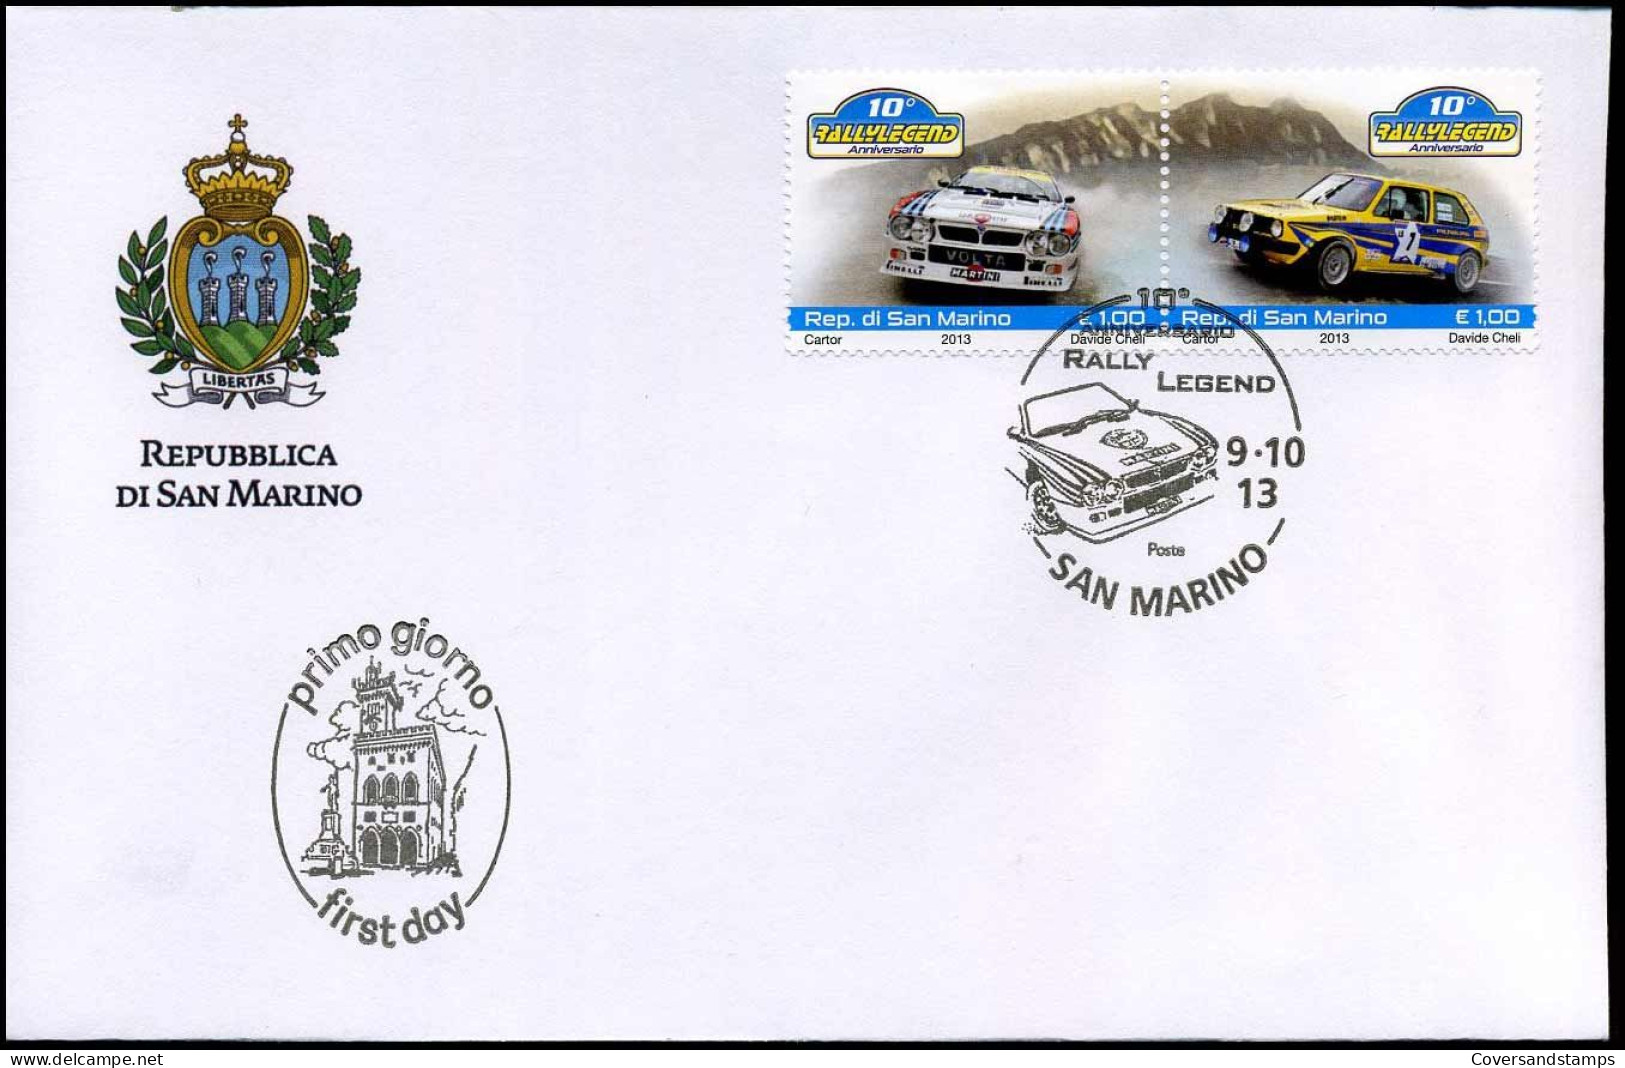 San Marino - FDC 2013 - Rally Legends - FDC